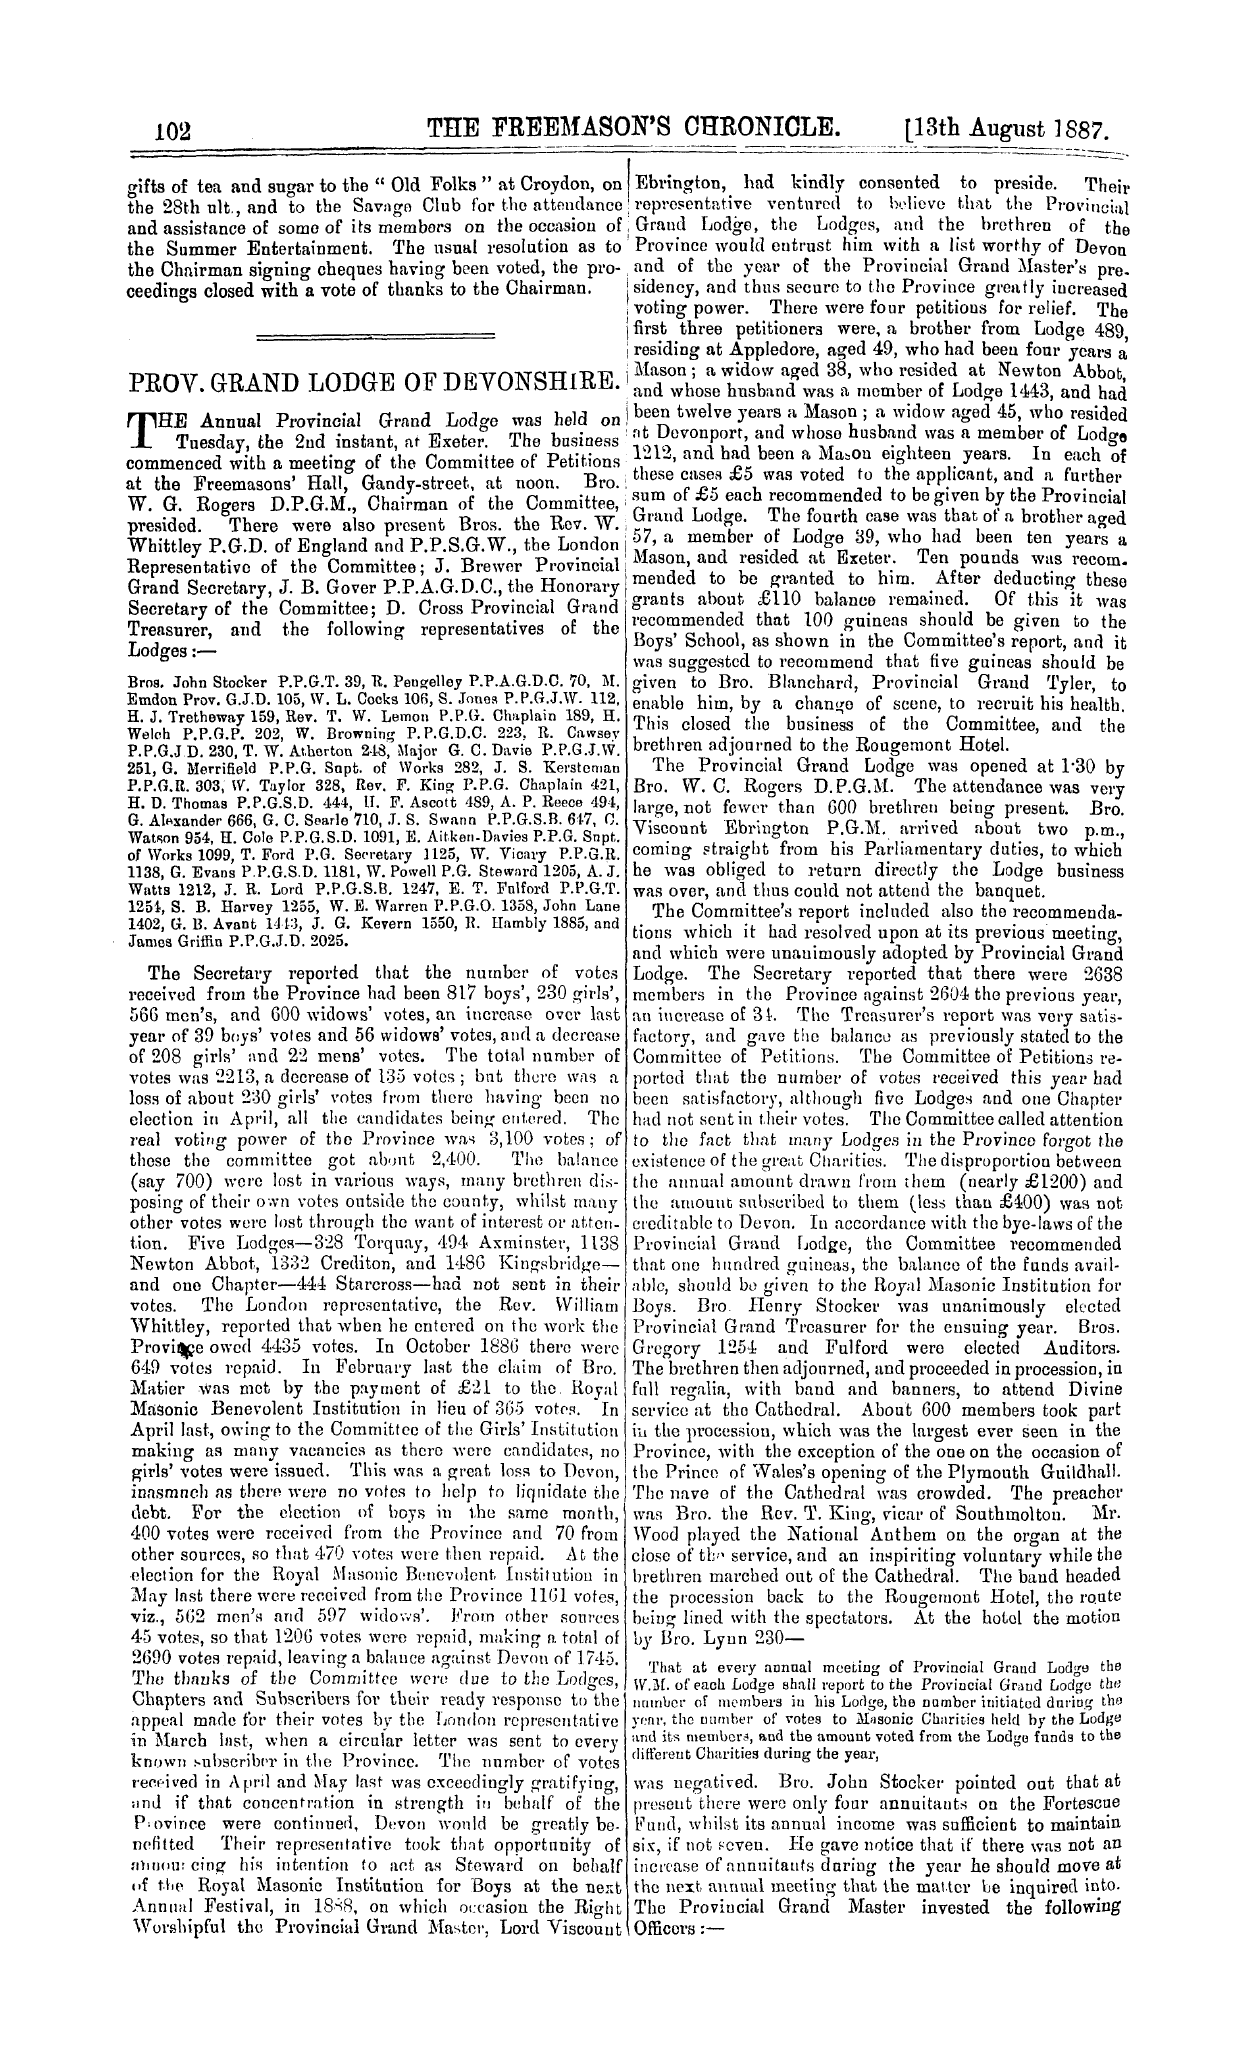 The Freemason's Chronicle: 1887-08-13 - Prov. Grand Lodge Of Devonshire.